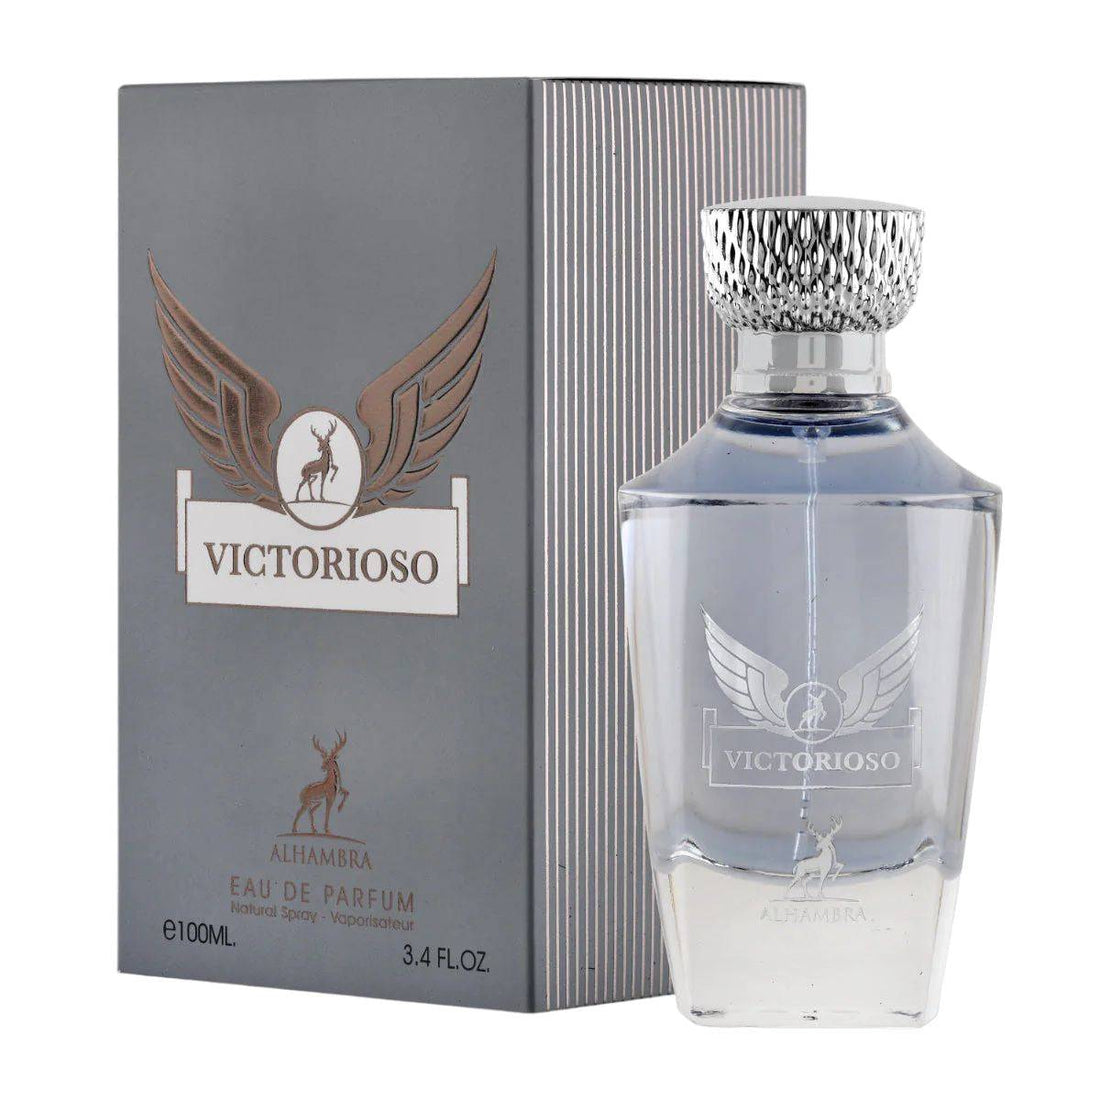 Elegant 100ml bottle of Victorioso Eau De Parfum by Maison Alhambra, showcasing its luxurious and bold character.